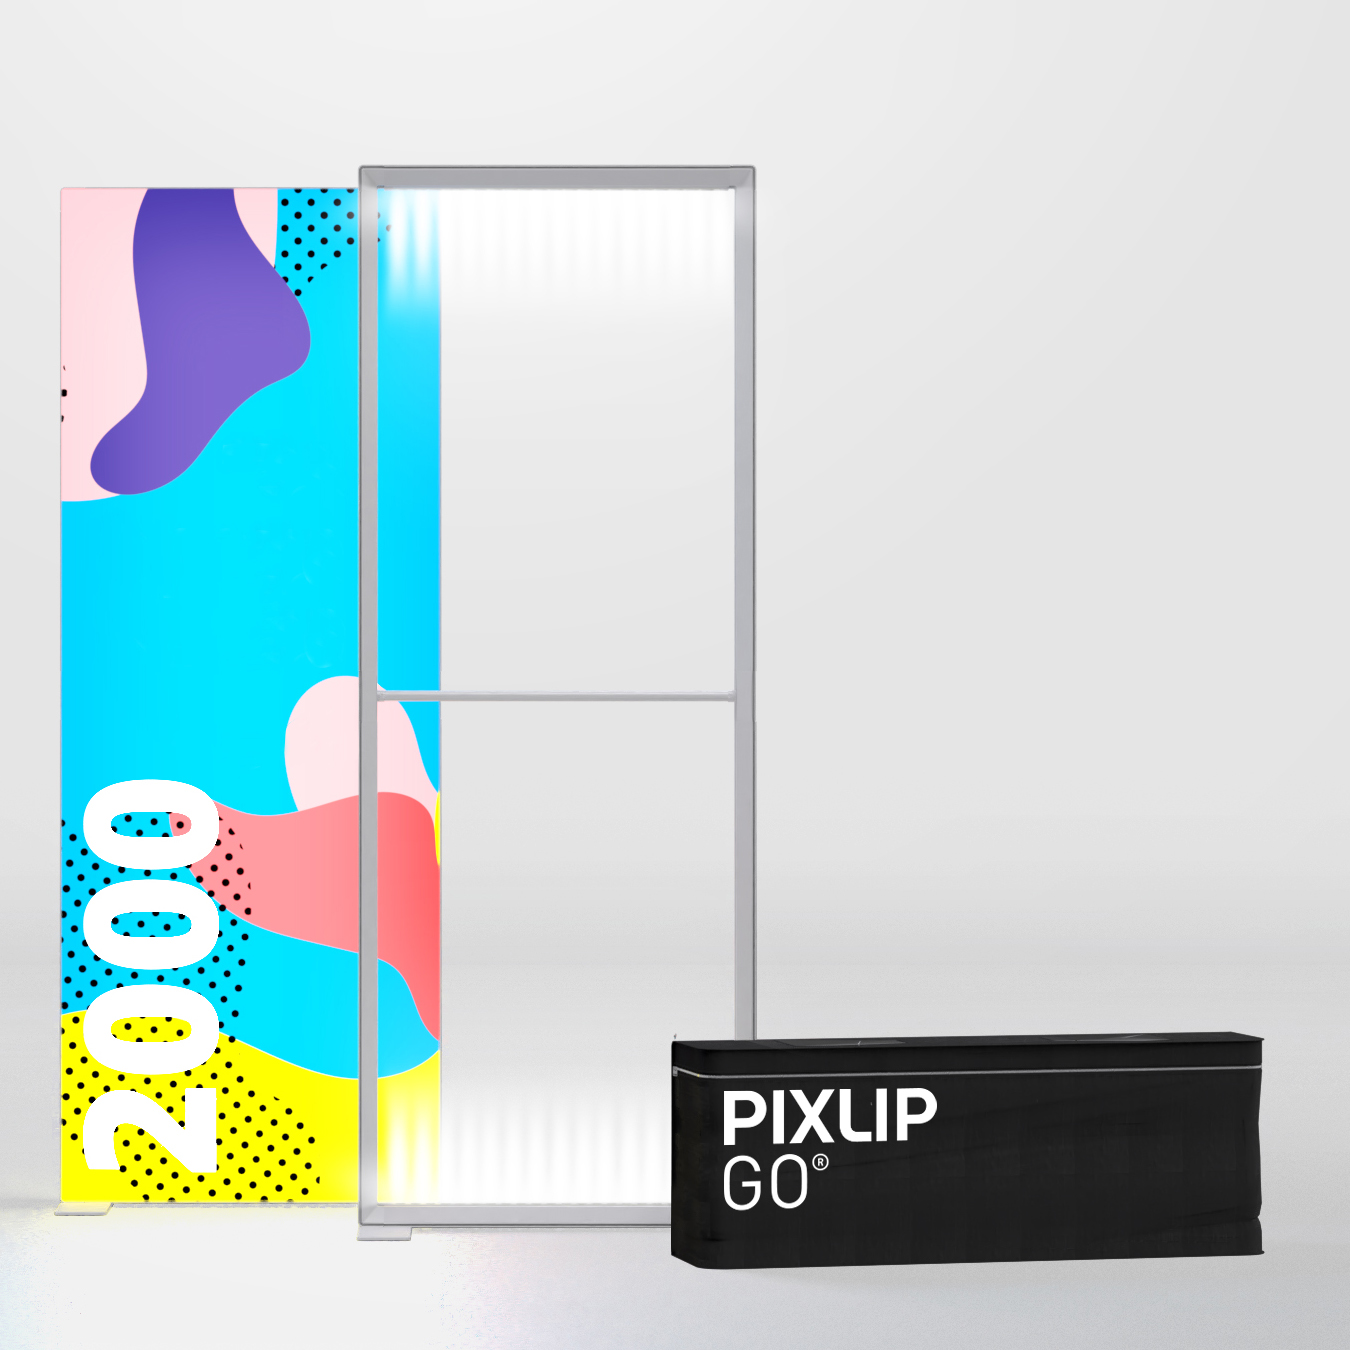 PIXLIP GO LED 85 x 200cm